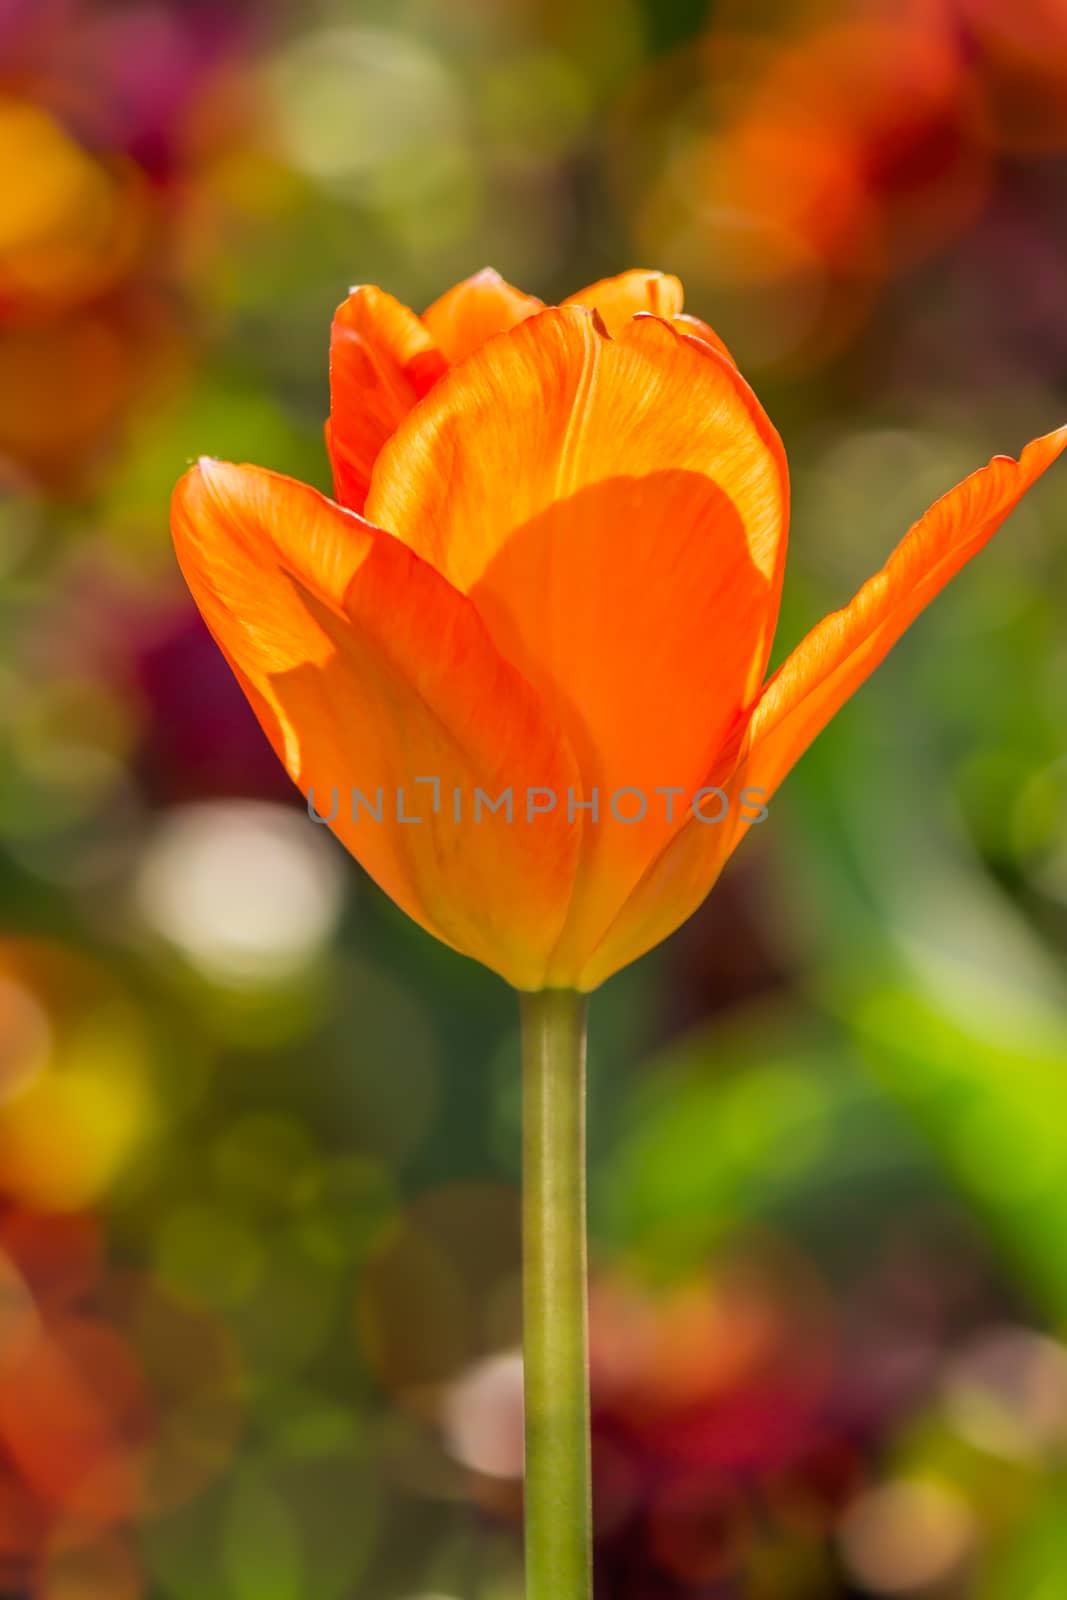 orange tulip on color blurred background  by Pellinni